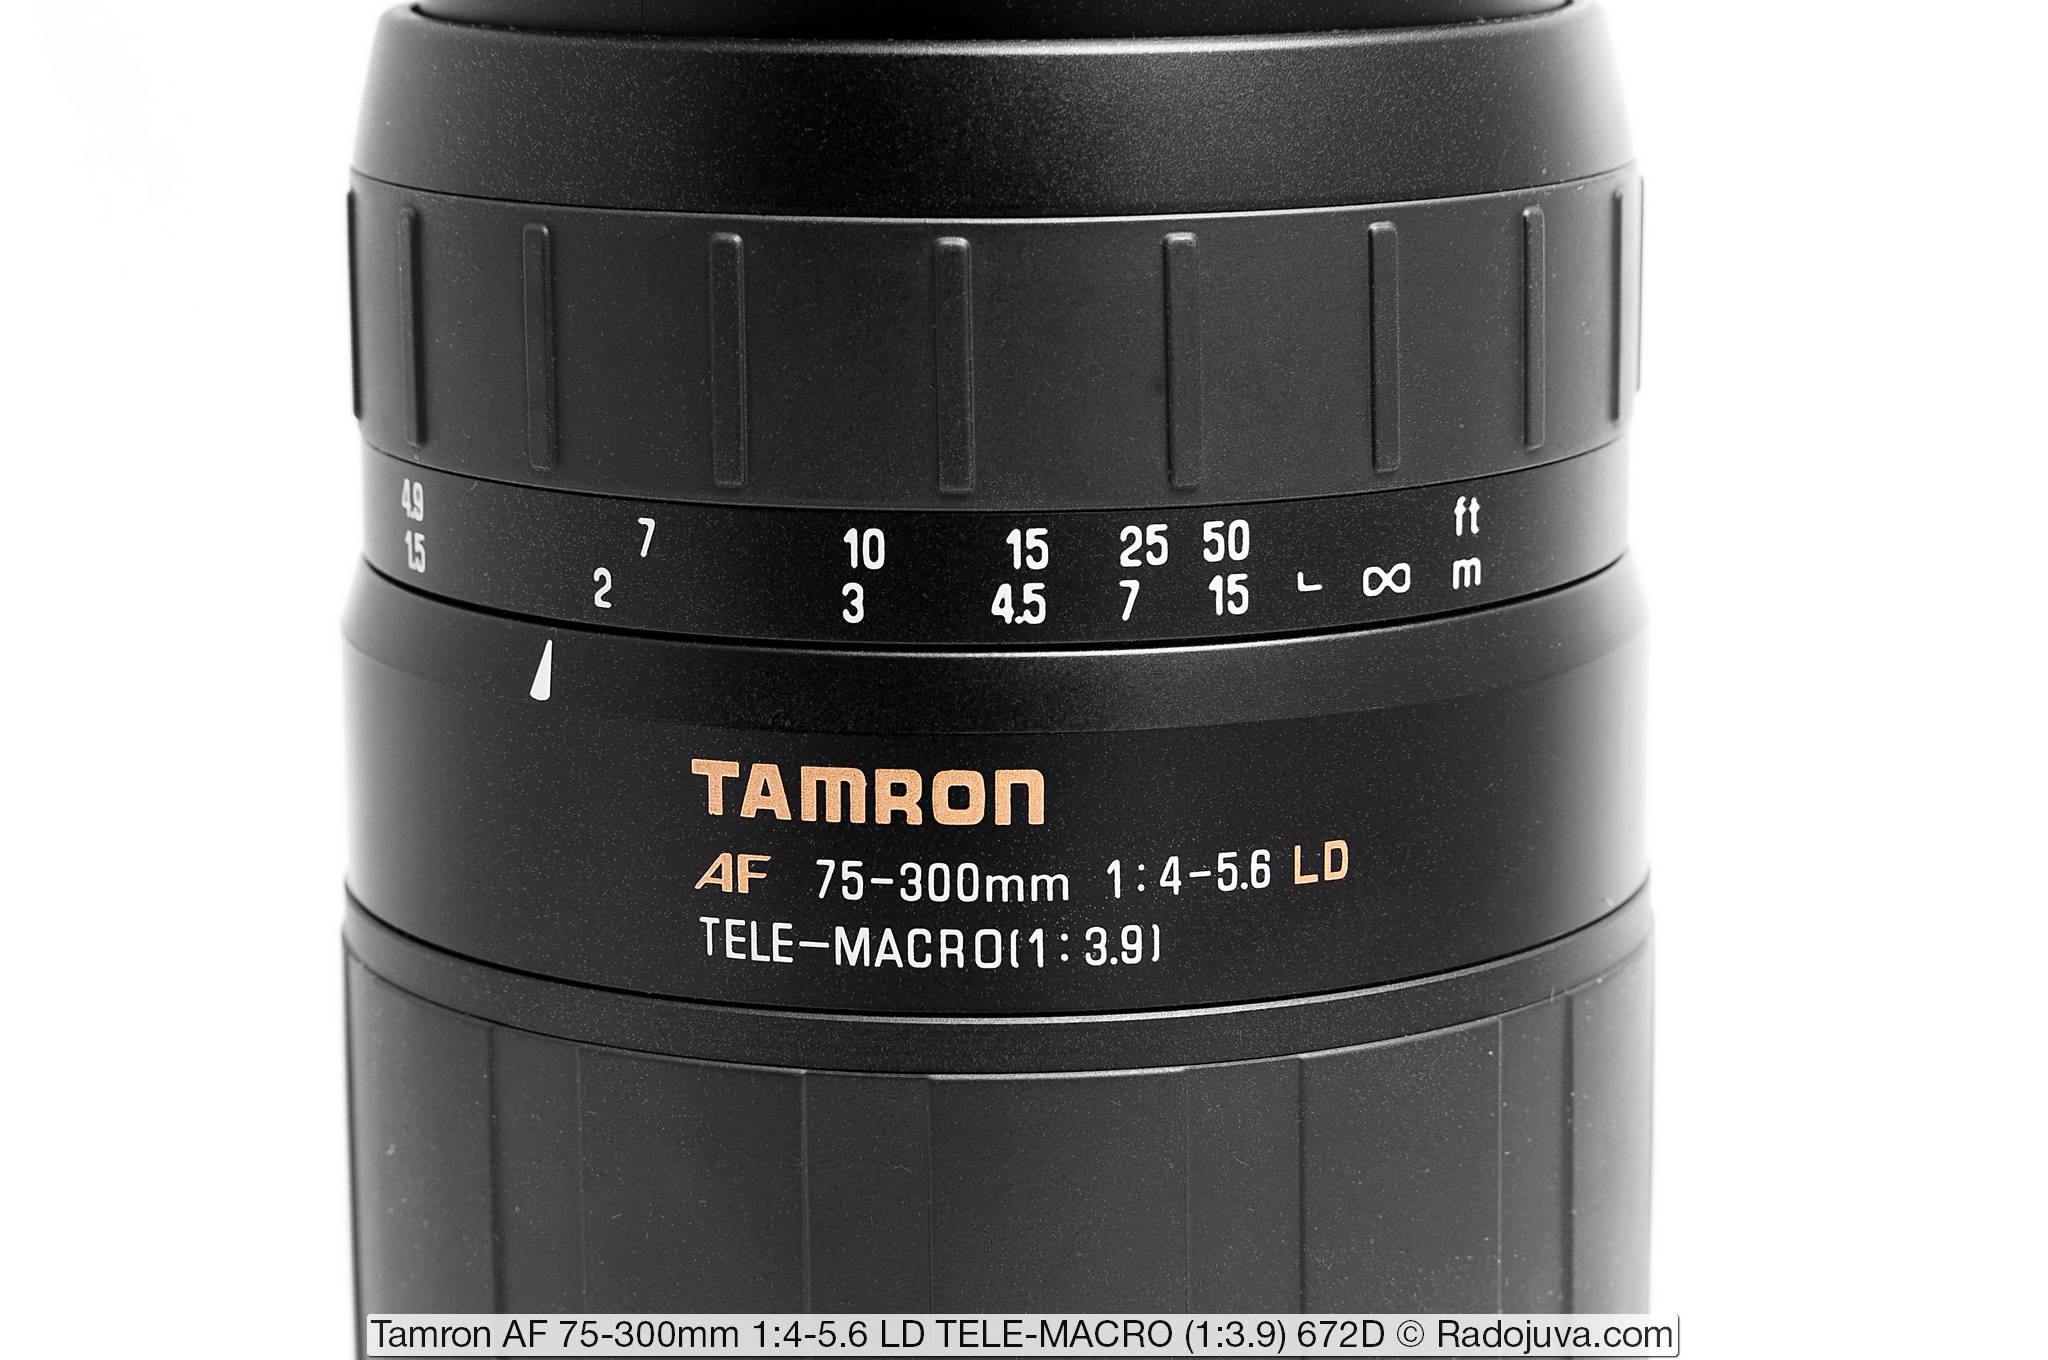 Tamron AF 75-300mm 1: 4-5.6 LD TELE-MACRO (1: 3.9) 672D